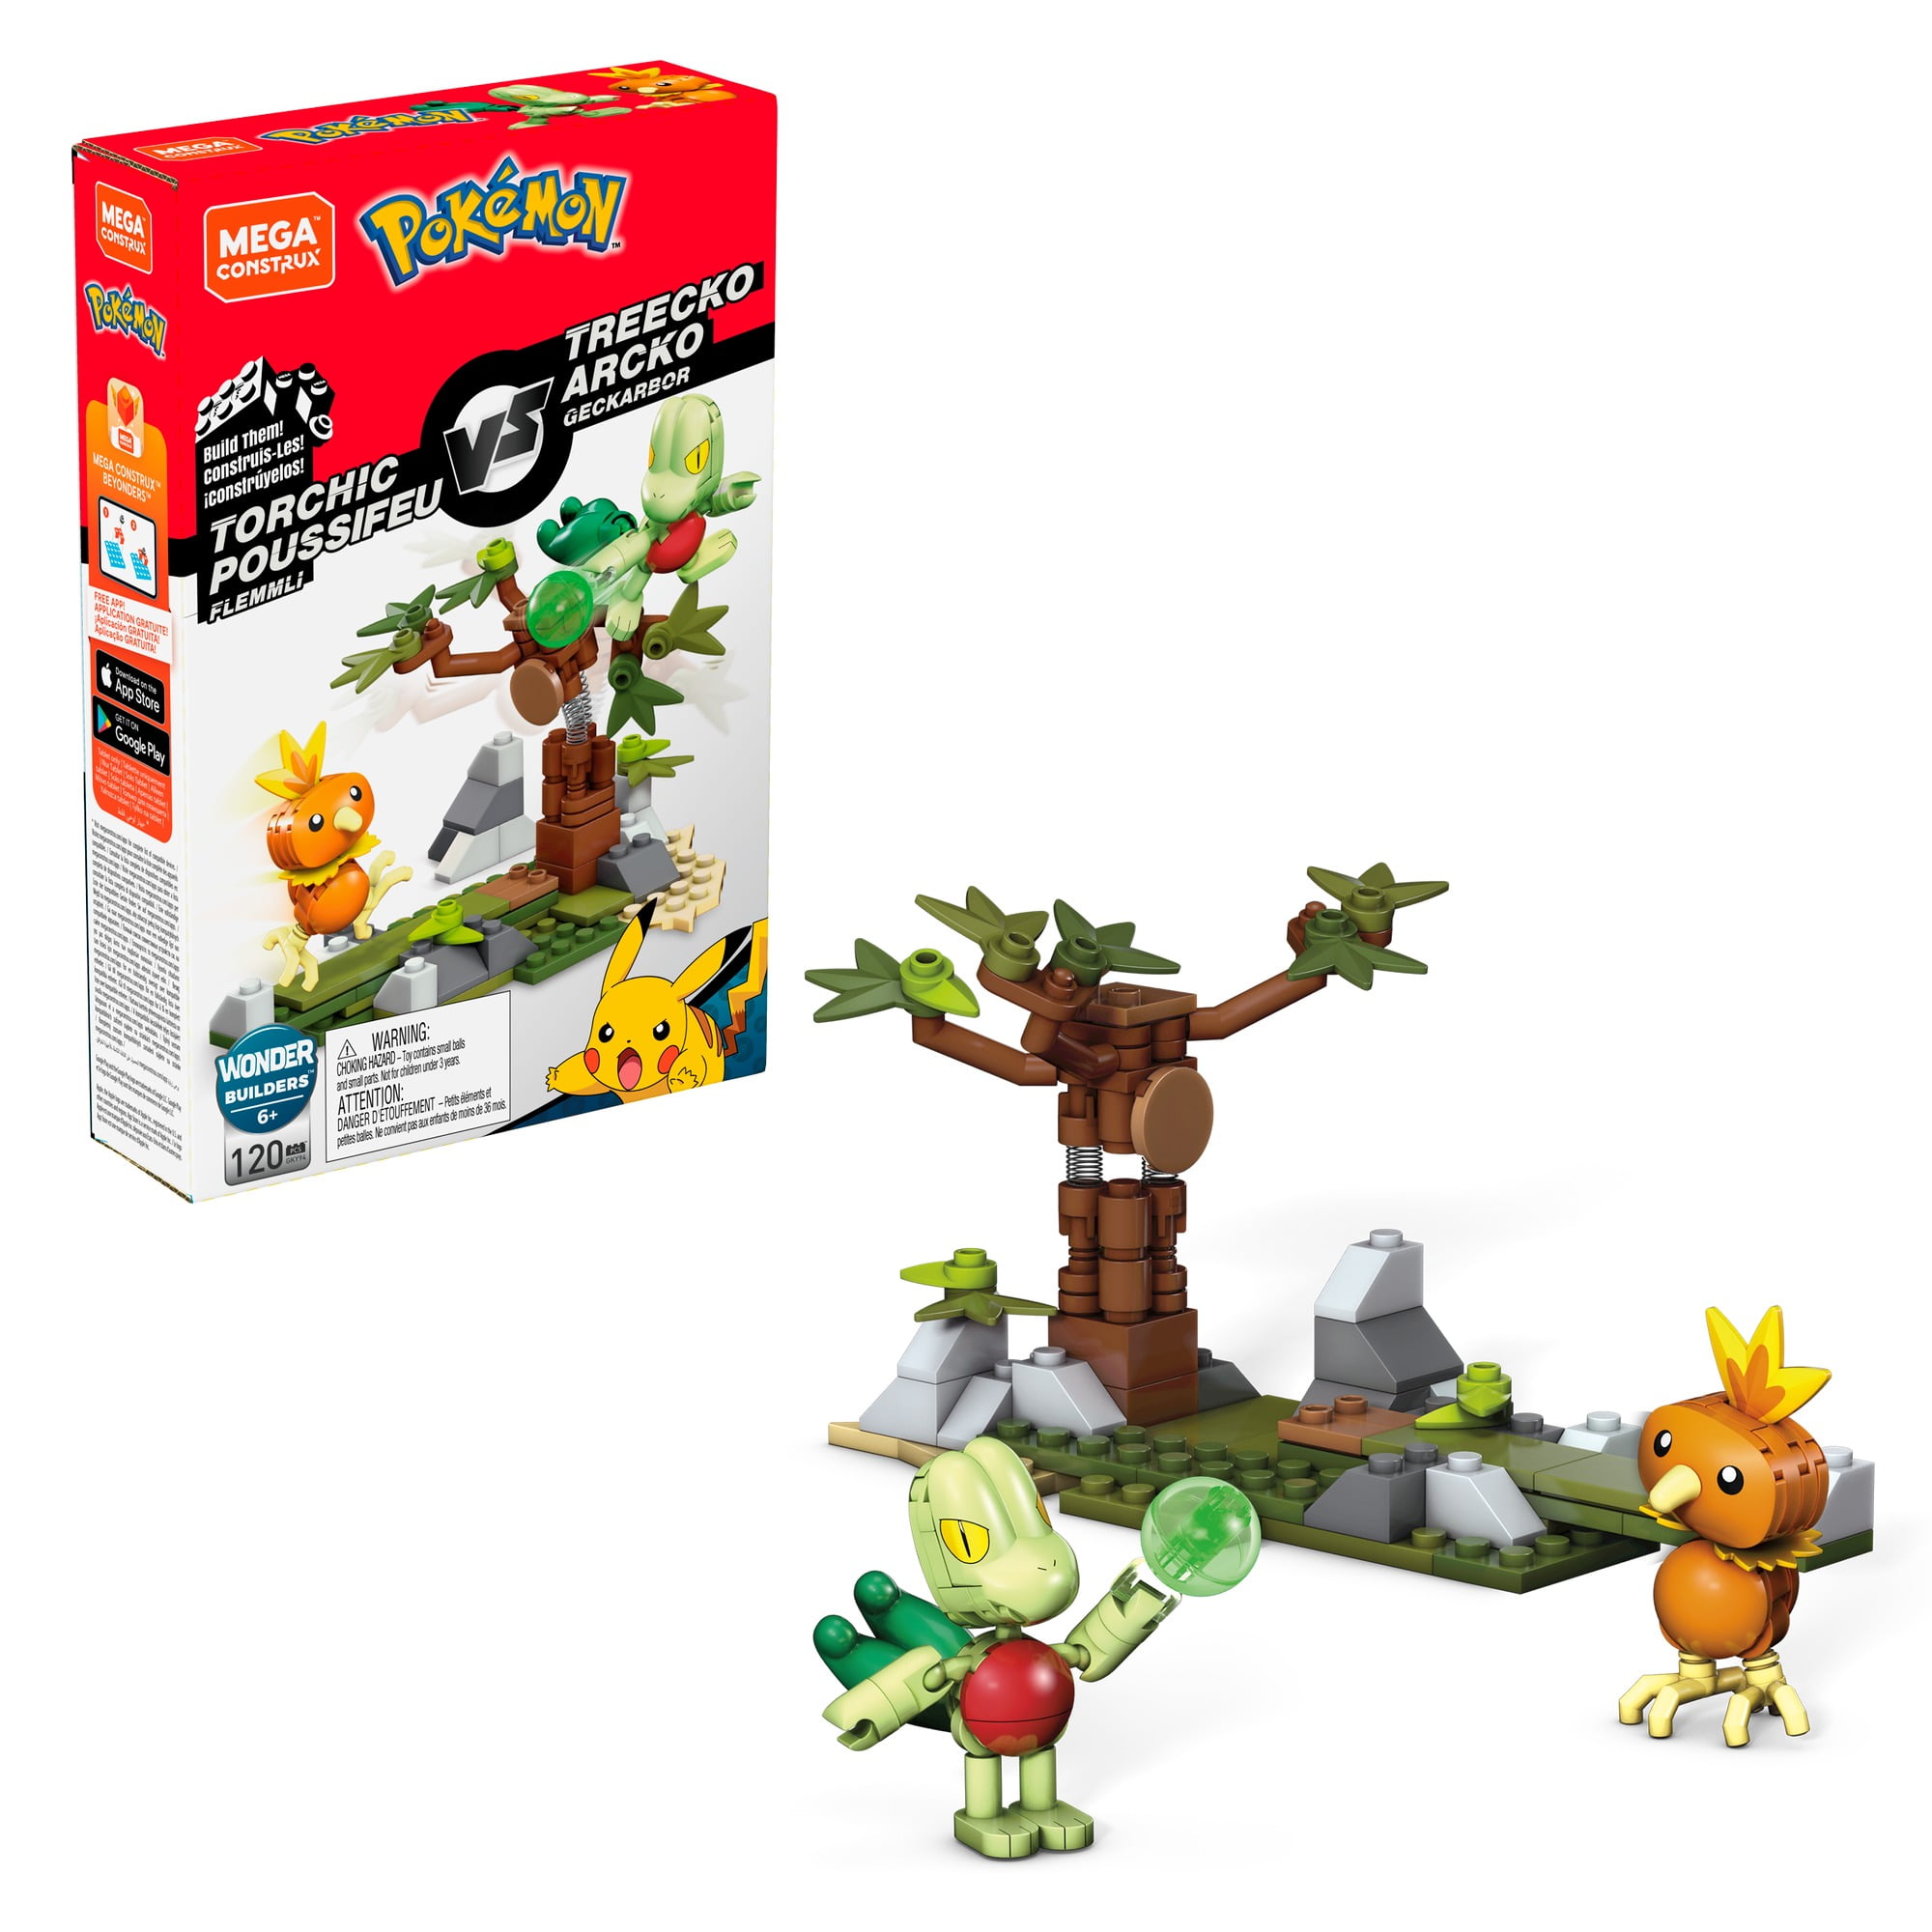 MEGA Construx Pokemon Torchic VS Treecko Construction Set Gky94 for sale online 